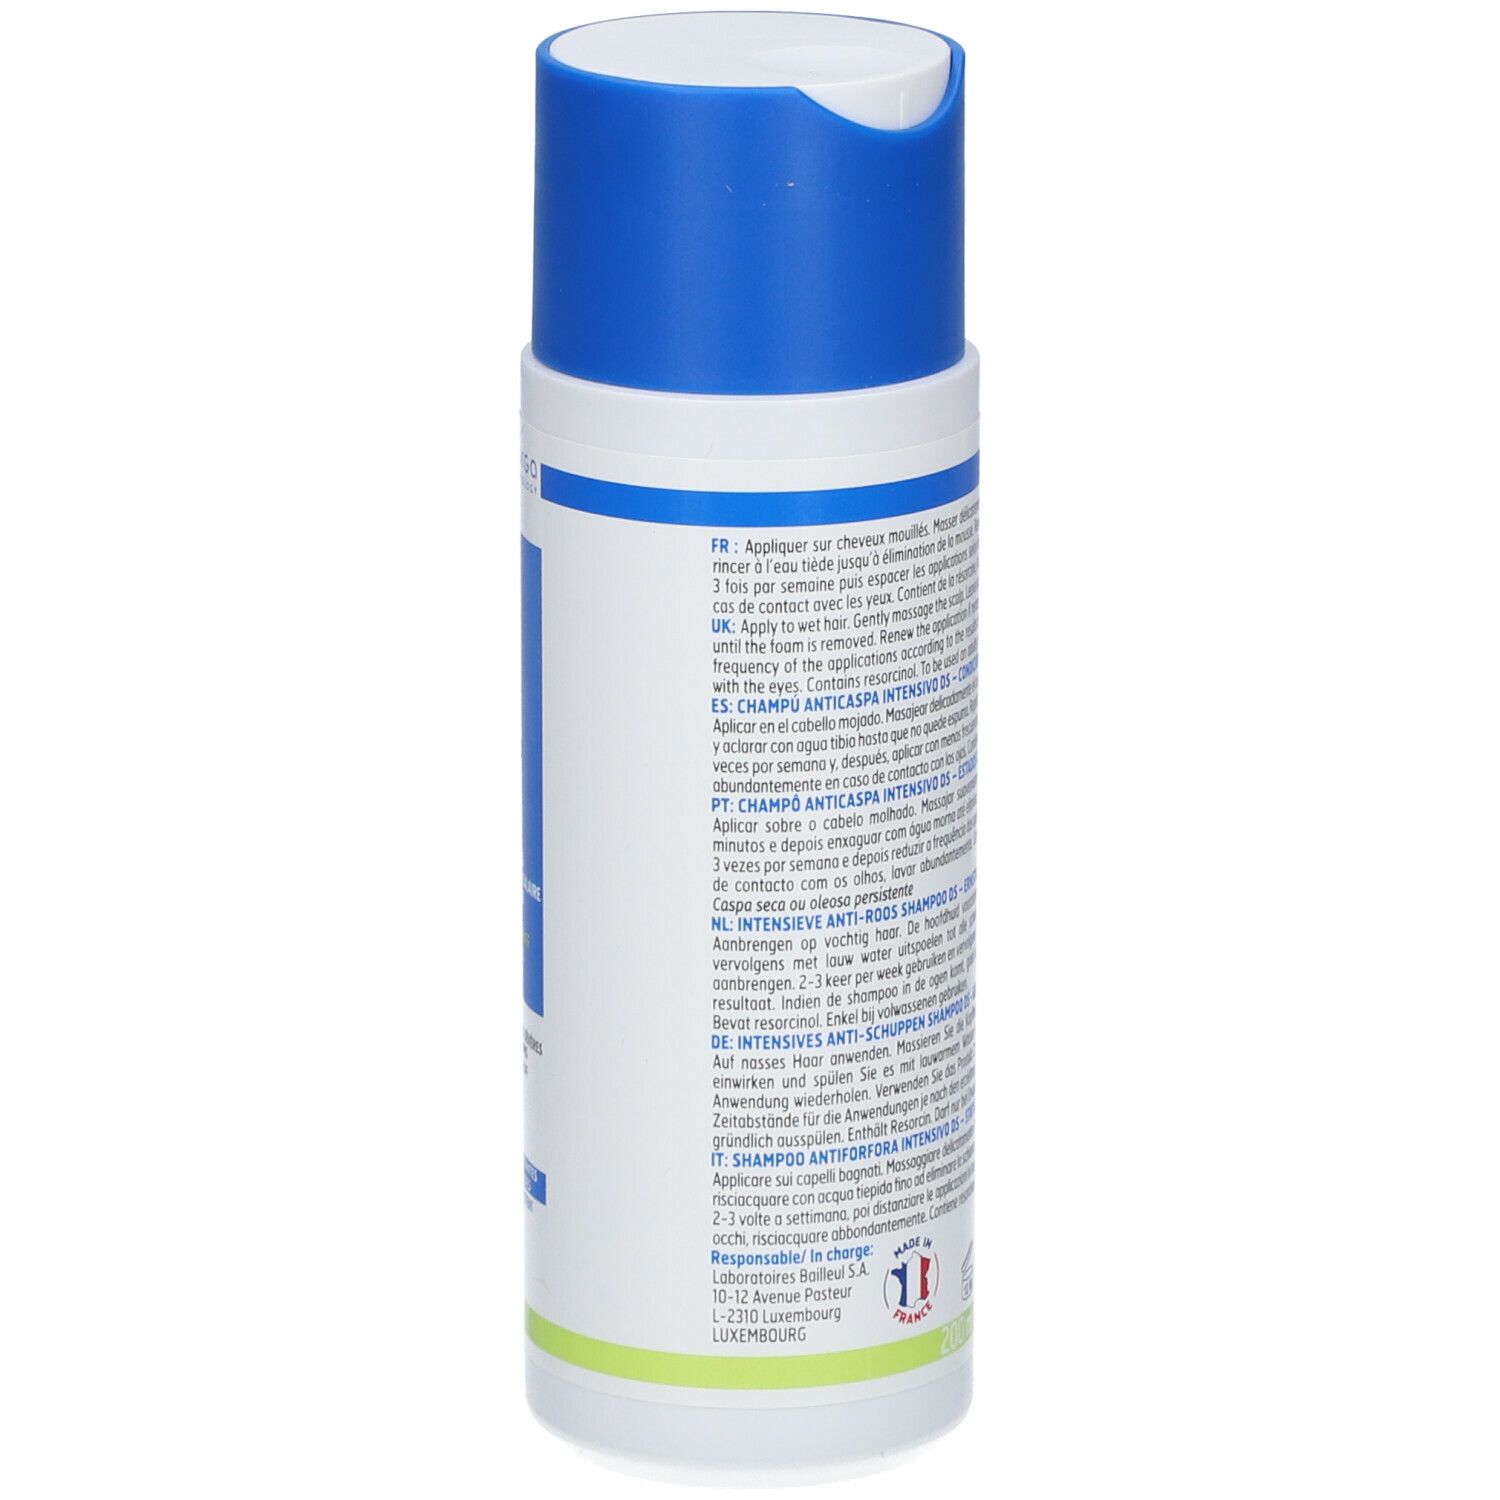 Cystiphane Biorga Shampoo Anti-Forfora Intensivo DS